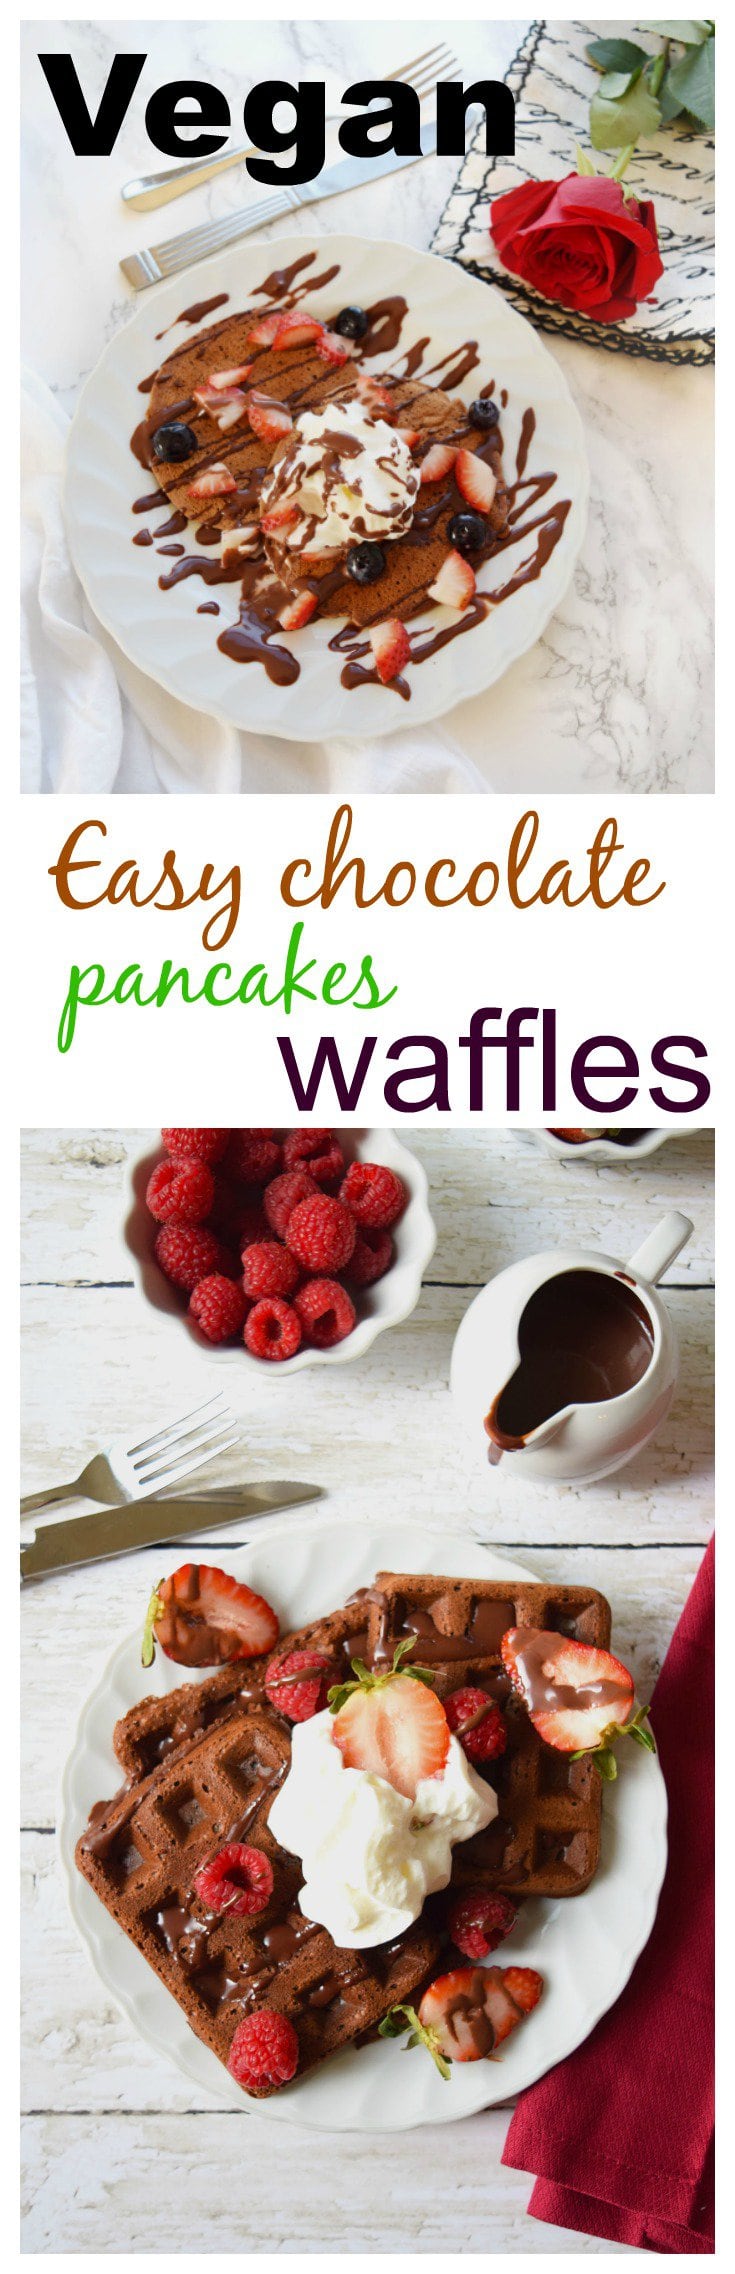 easy-chocolate-pancakes-and-waffles-vegan